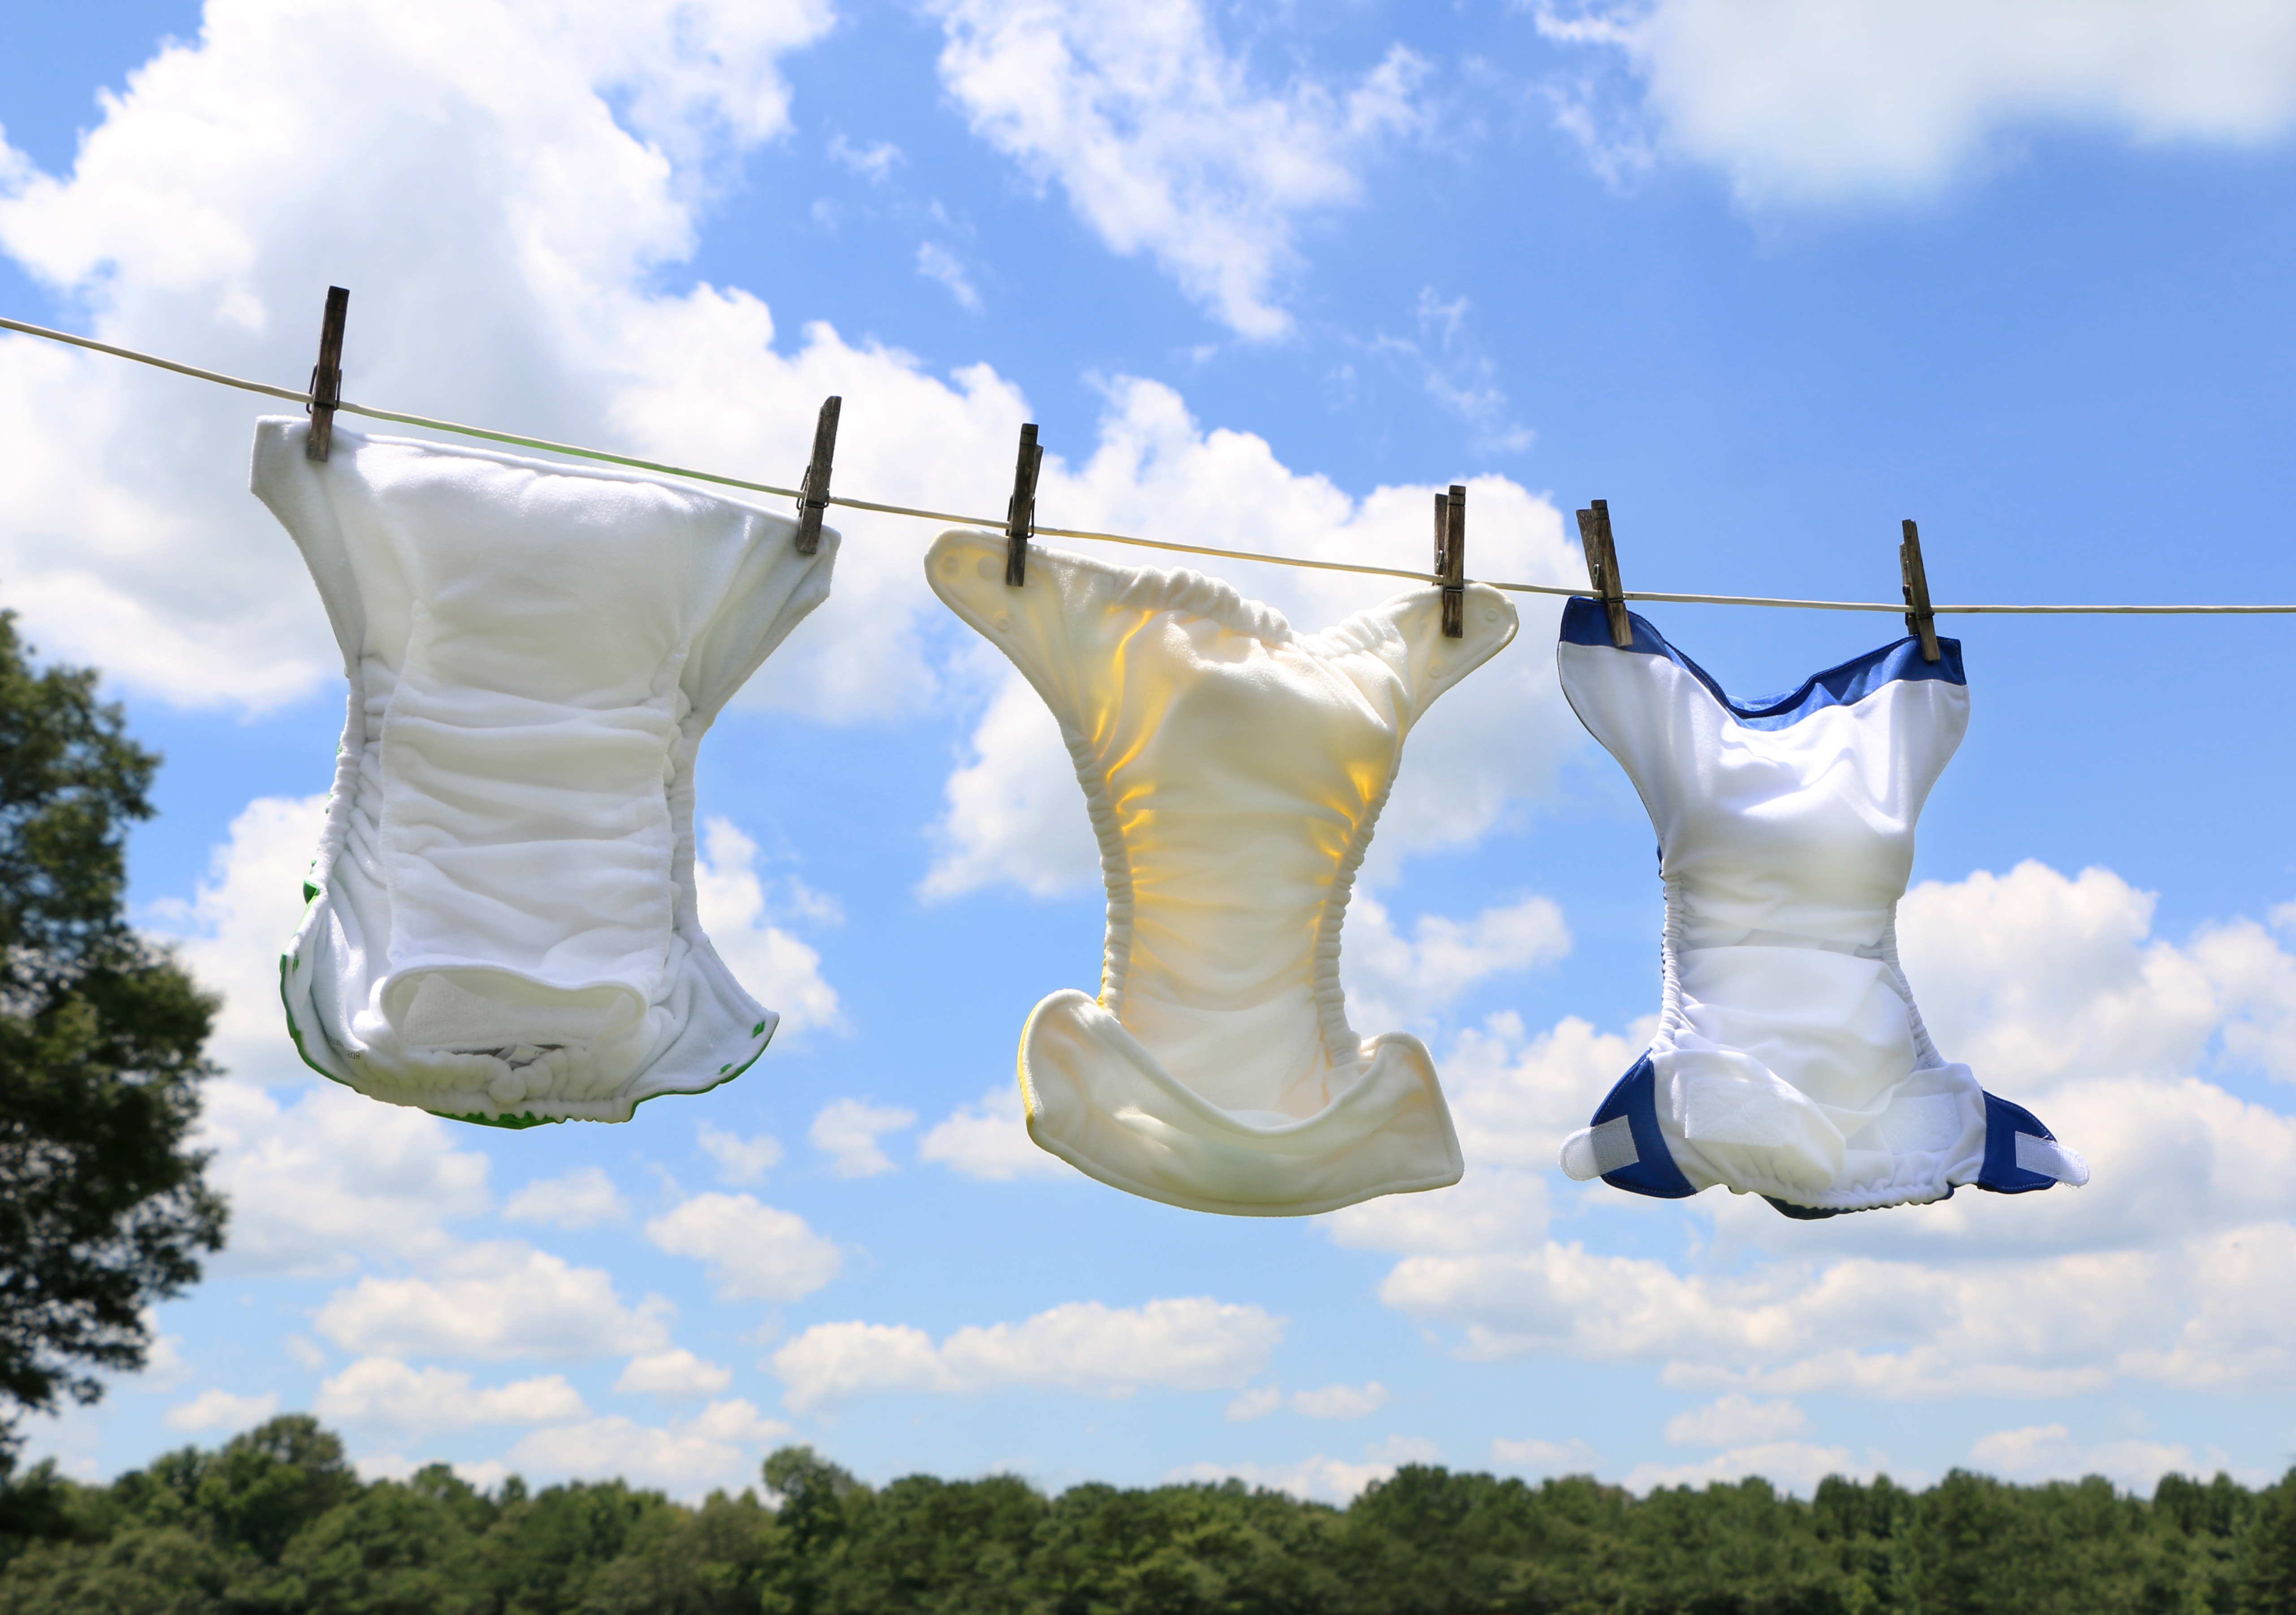 Reusable nappies hanging on washing line